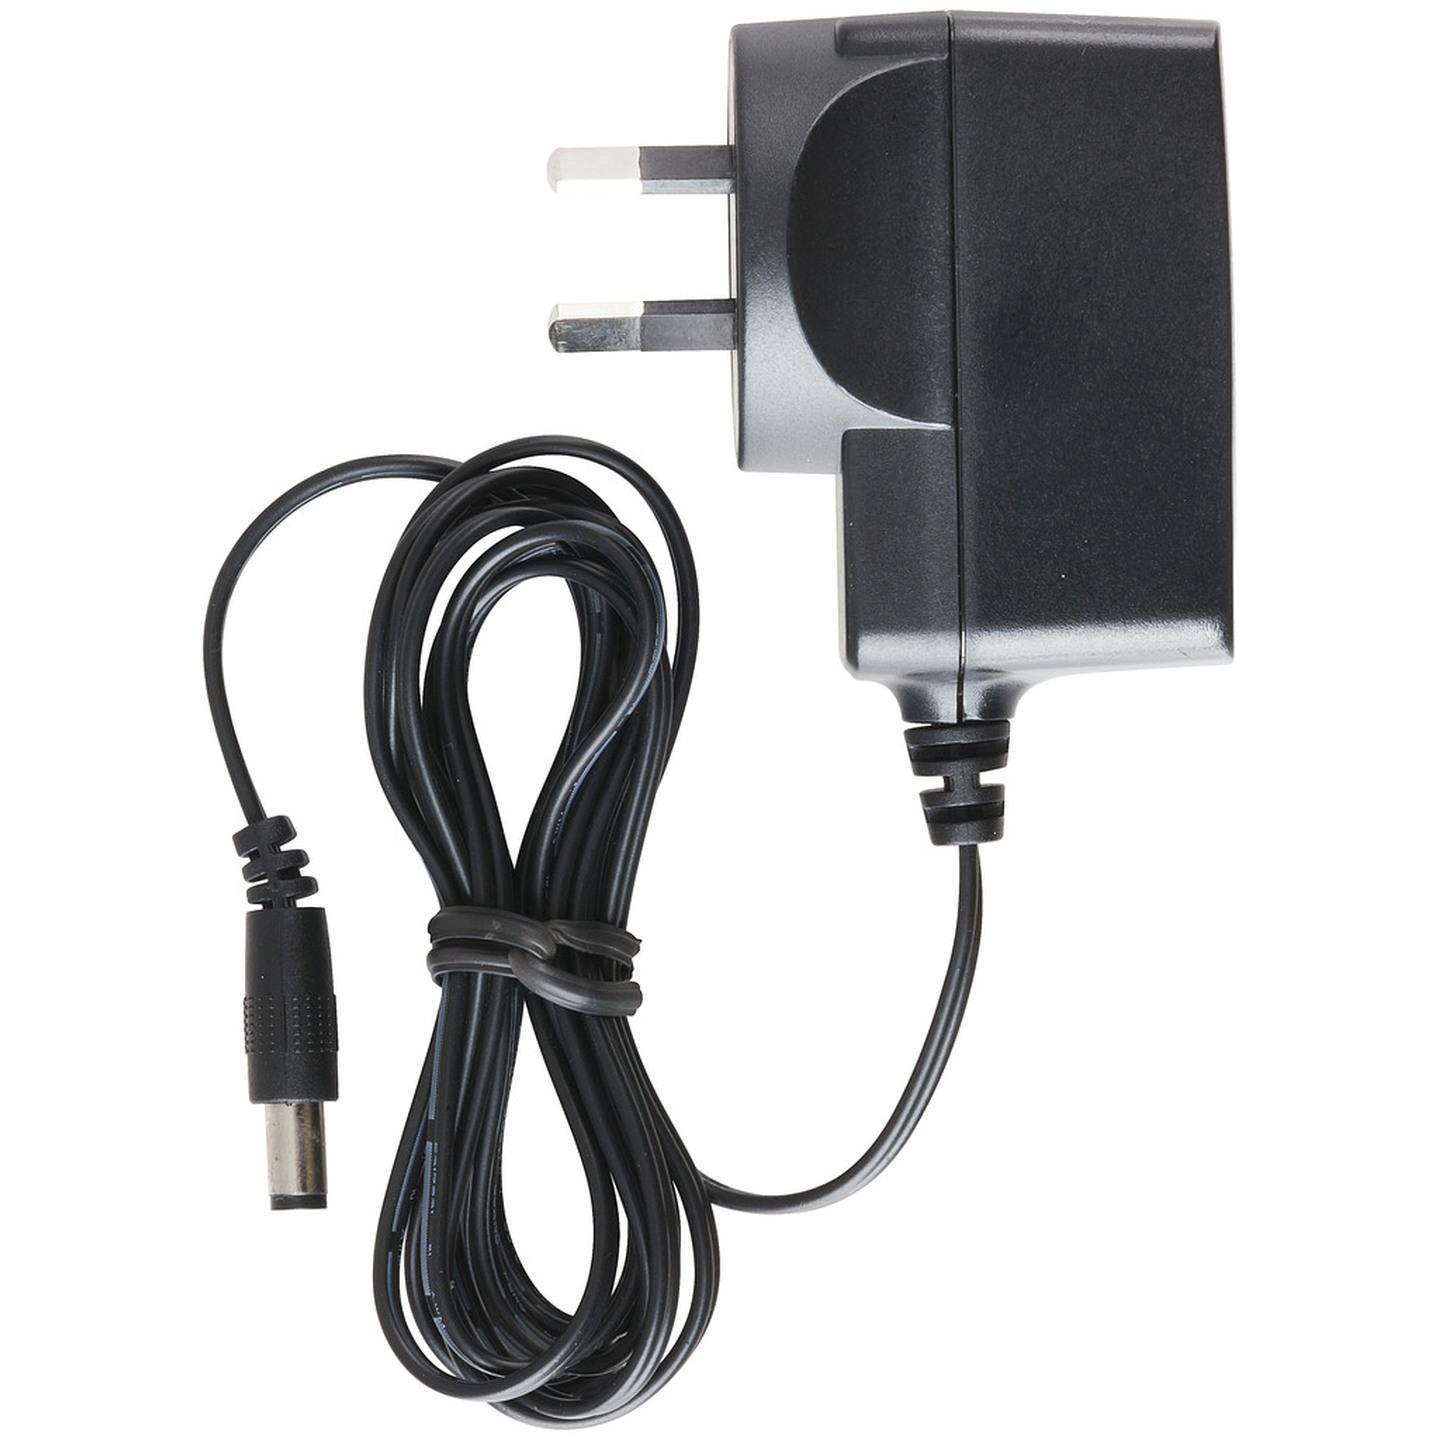  2 x HDMI to VGA/Component & Analogue/Digital Audio Converter